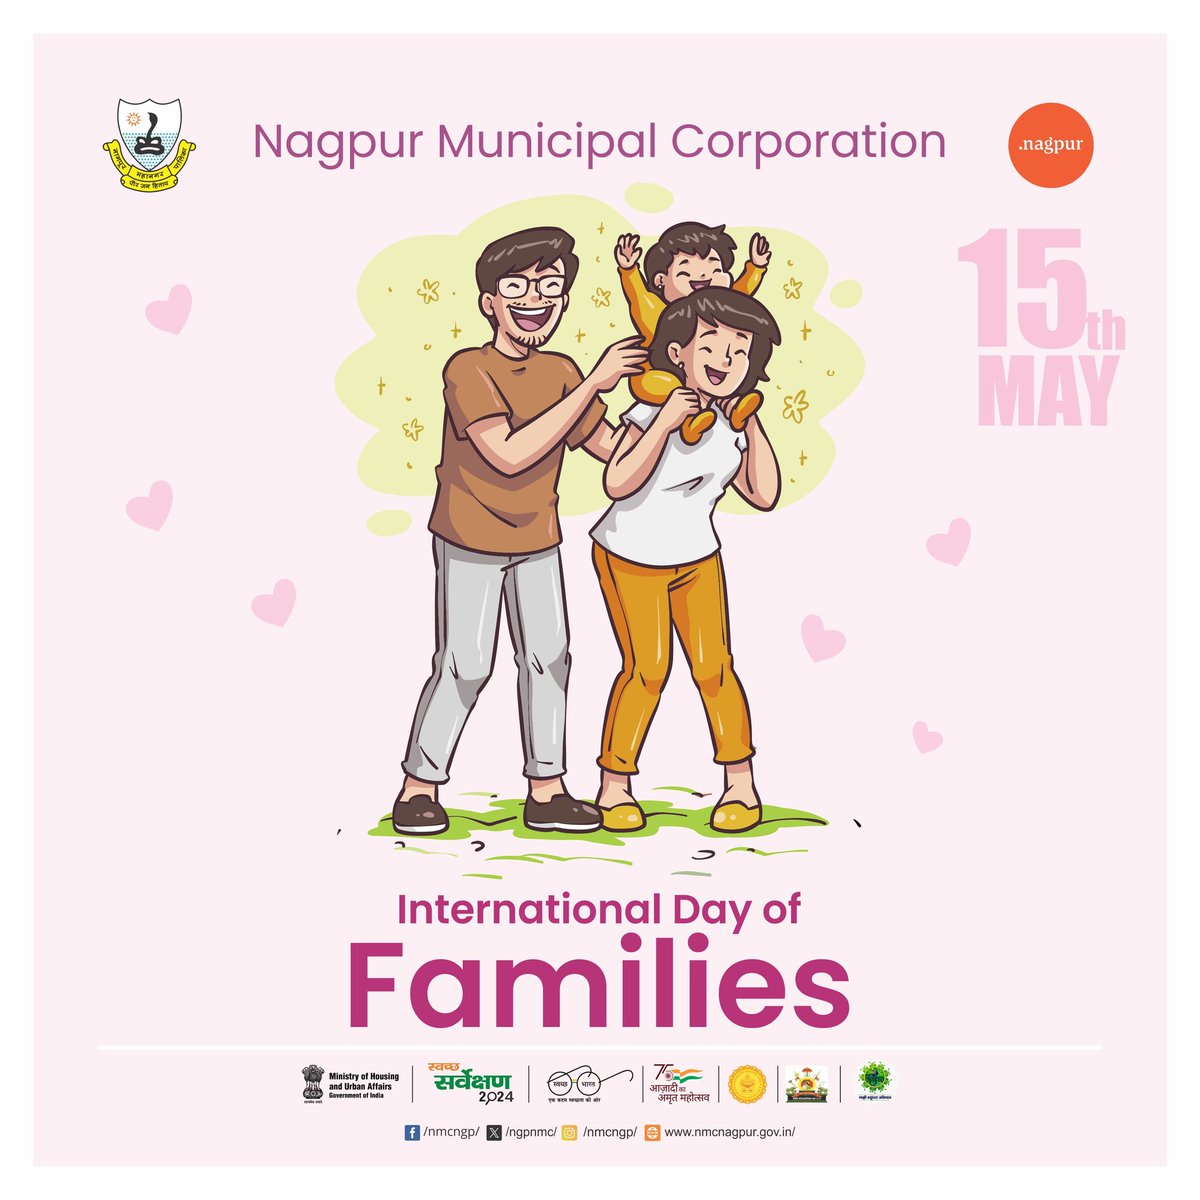 International Day of Families
.
.
.
#NMC #NMCNagpur #Nagpurcity #internationalday #familyday